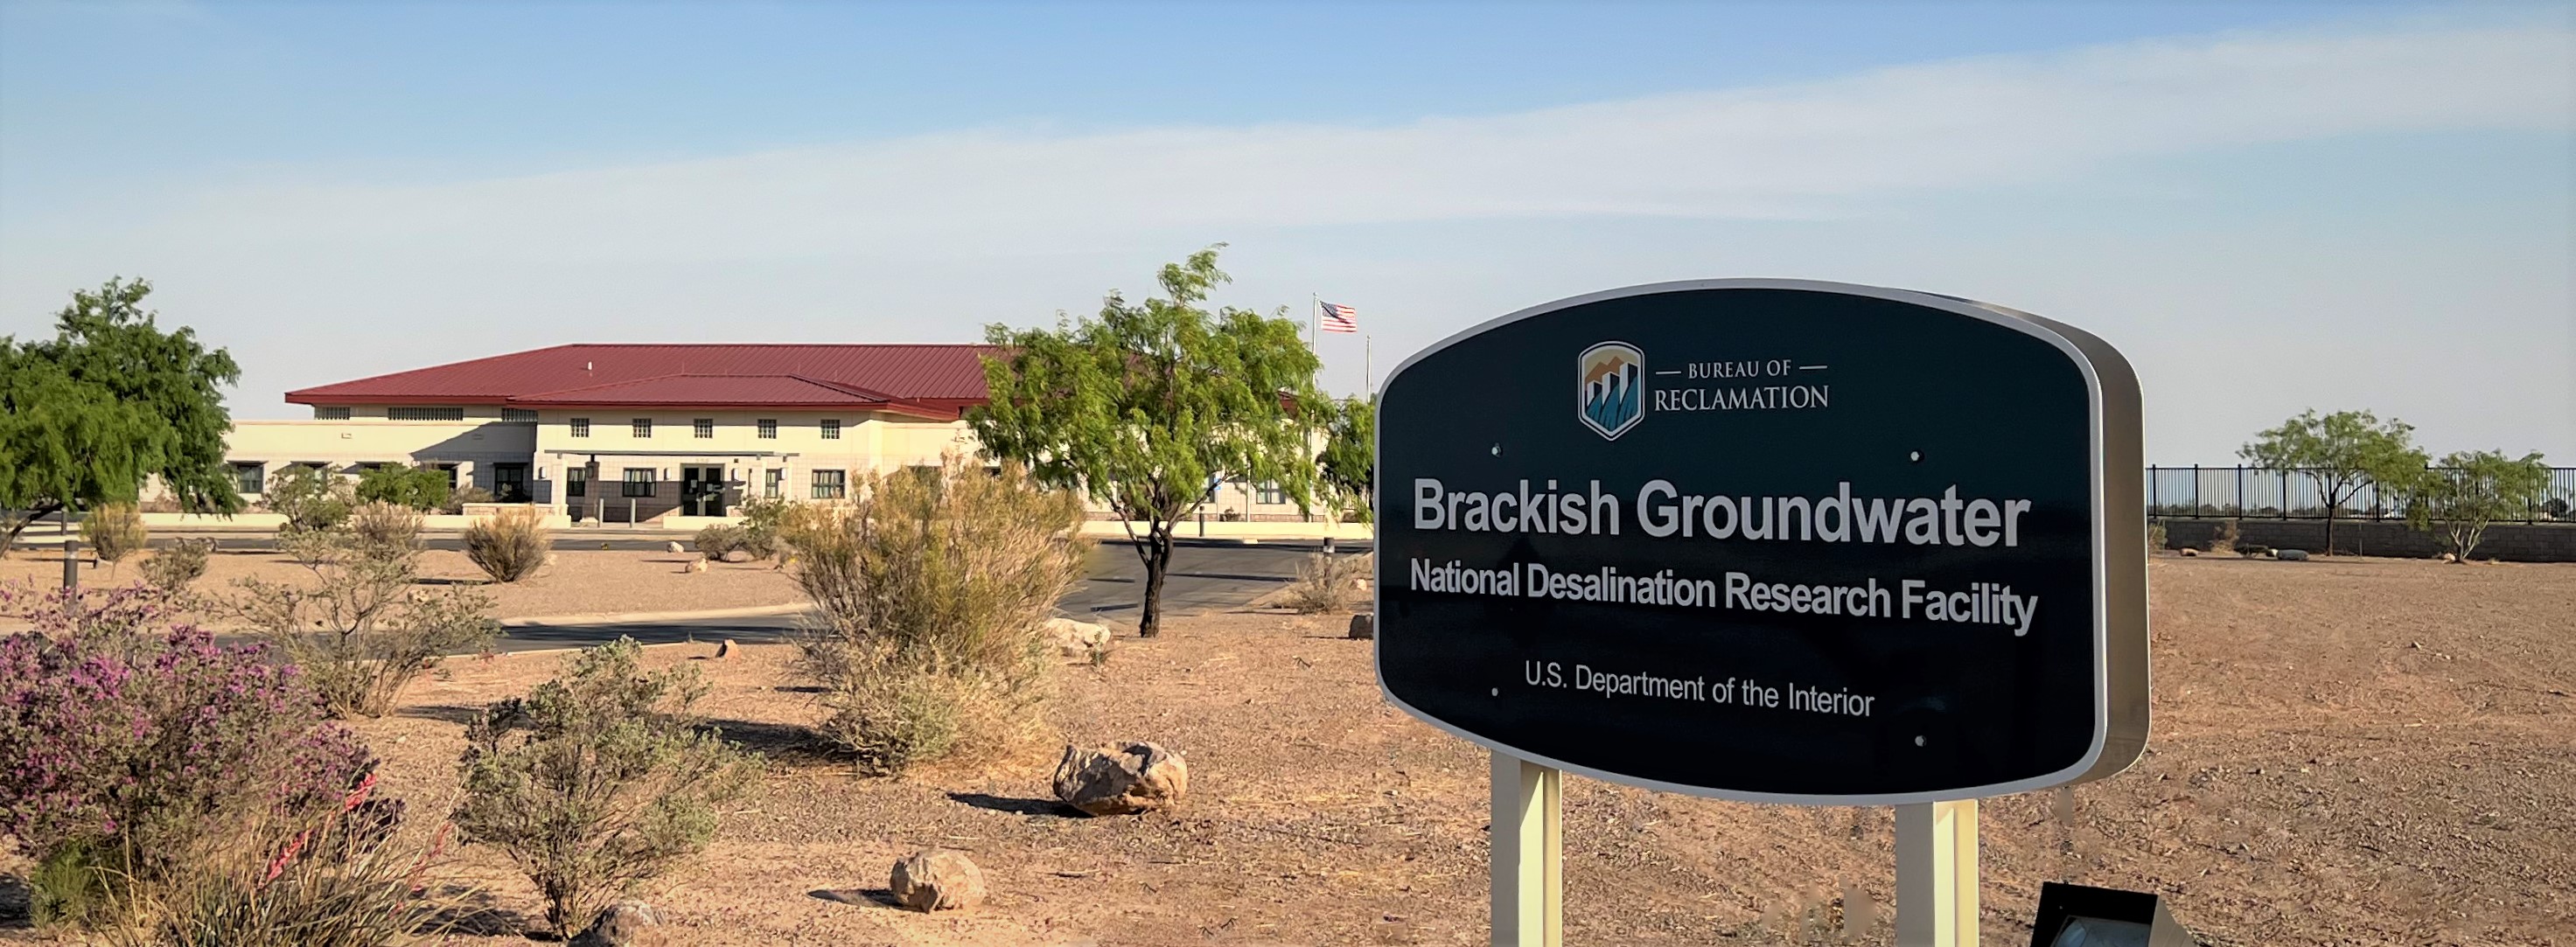 Brackish Groundwater National Desalination Research Facility